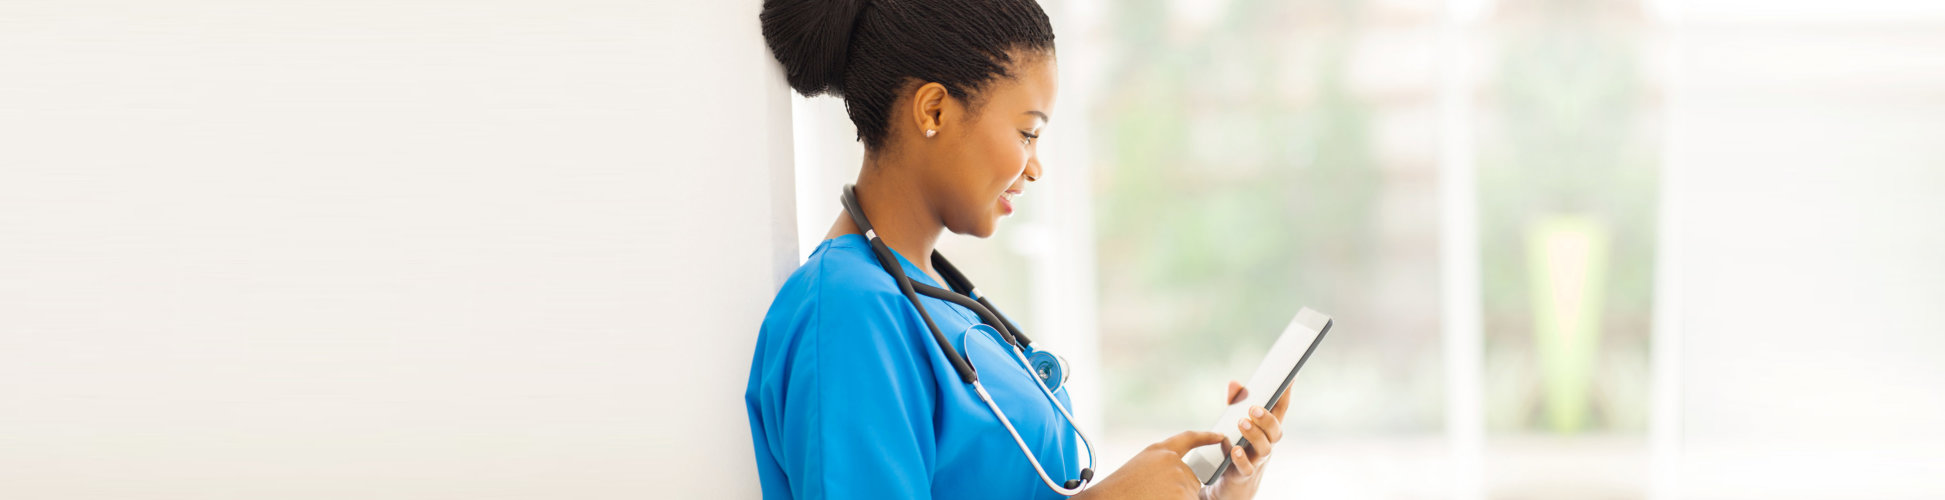 nurse smiling wearing stethoscope using tablet